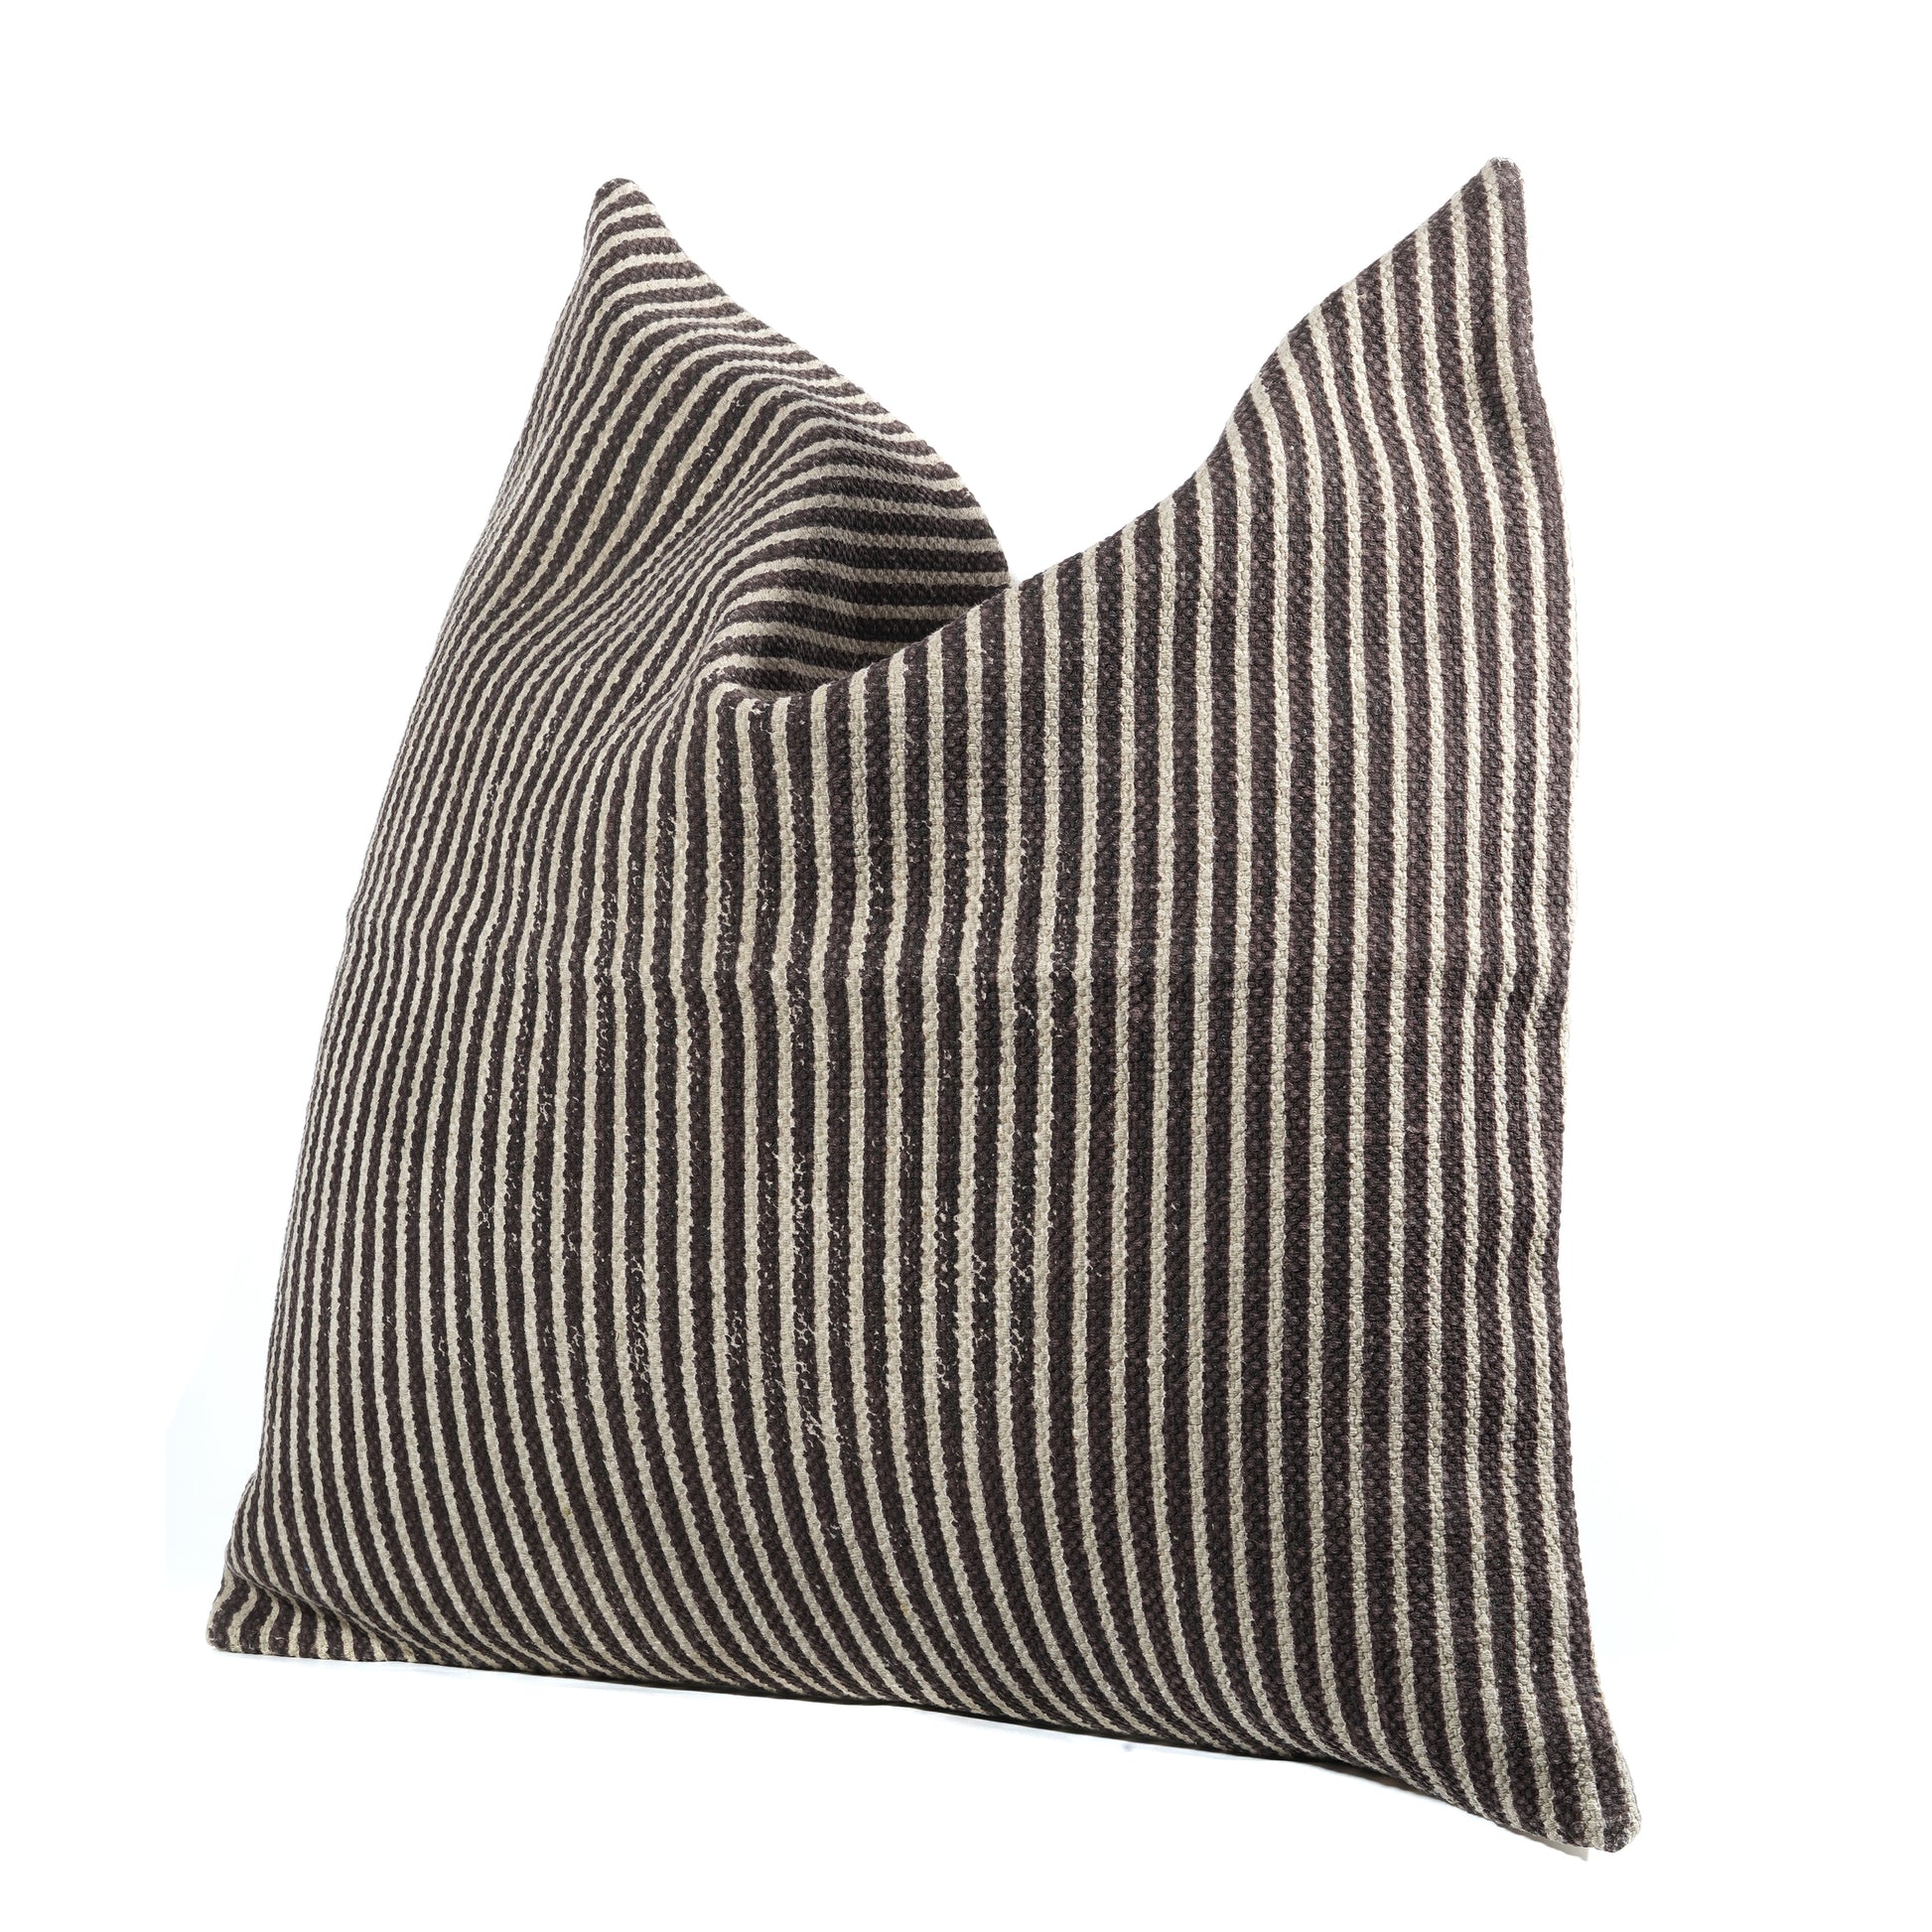 Rug Cushion Cover- Stripes - The Teal Thread